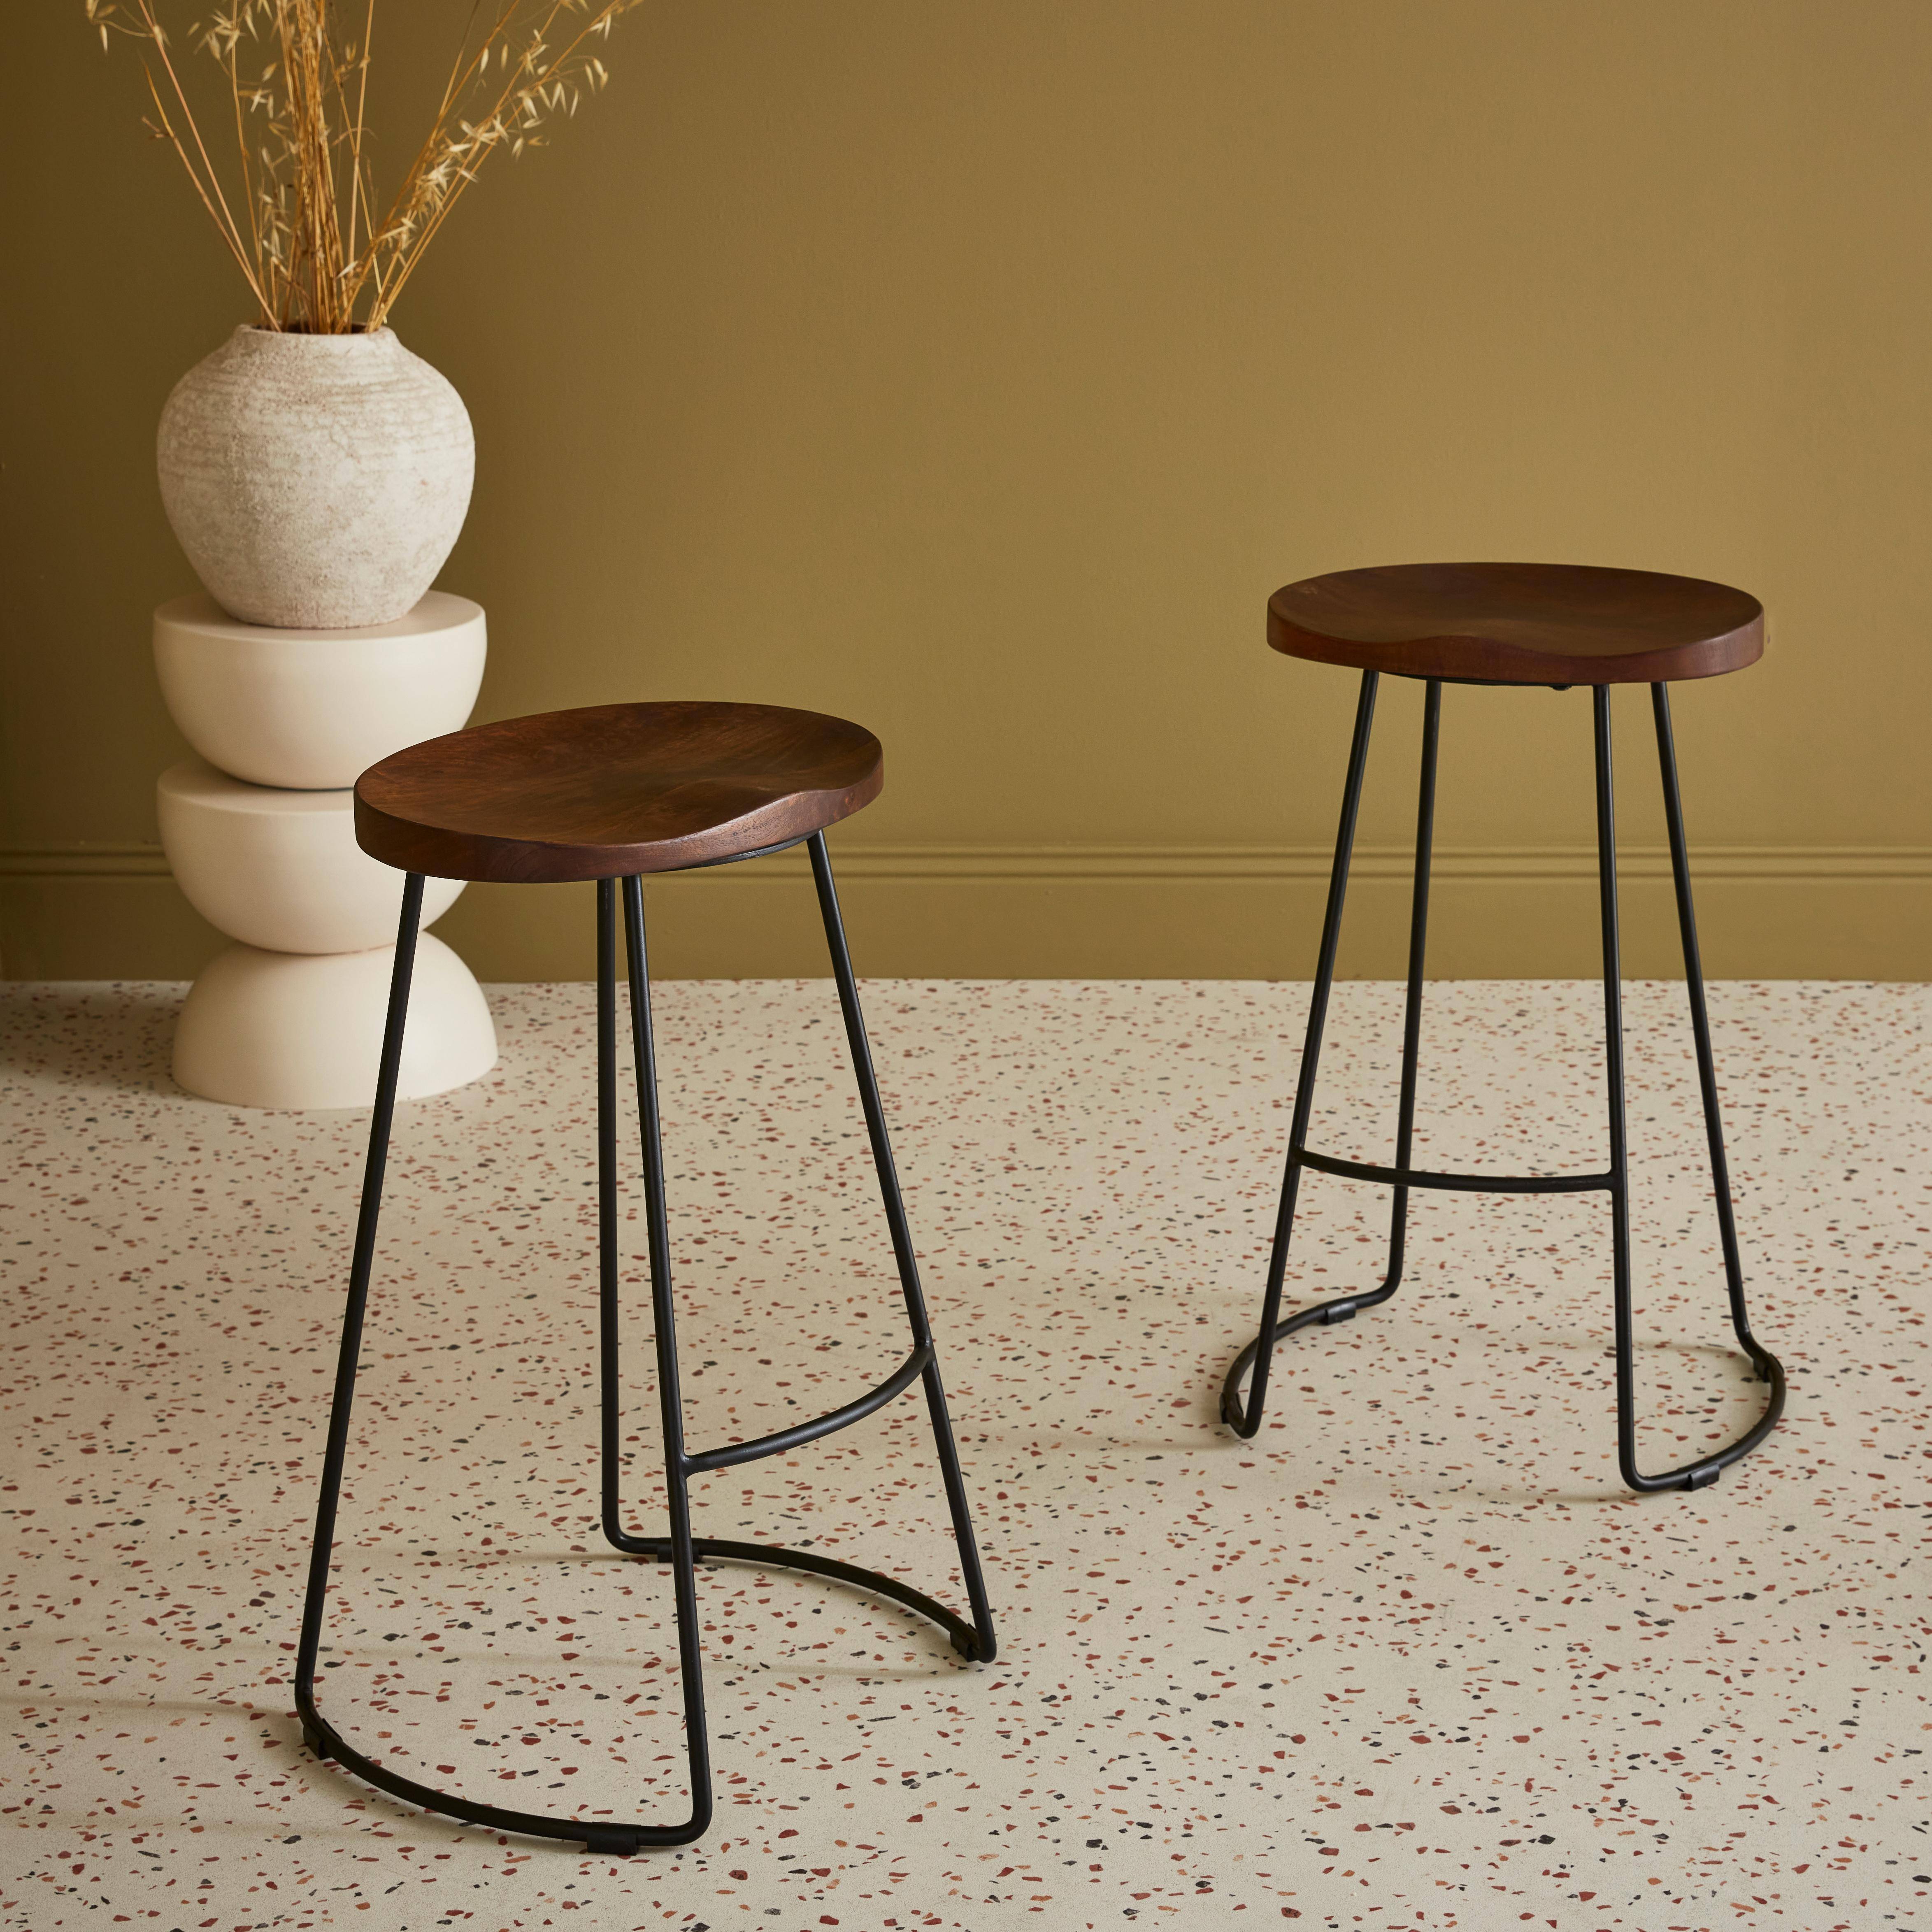 Pair of industrial metal and wooden bar stools, 44x36x65cm, Jaya, Light Walnut, Mango wood seat, black metal legs,sweeek,Photo1